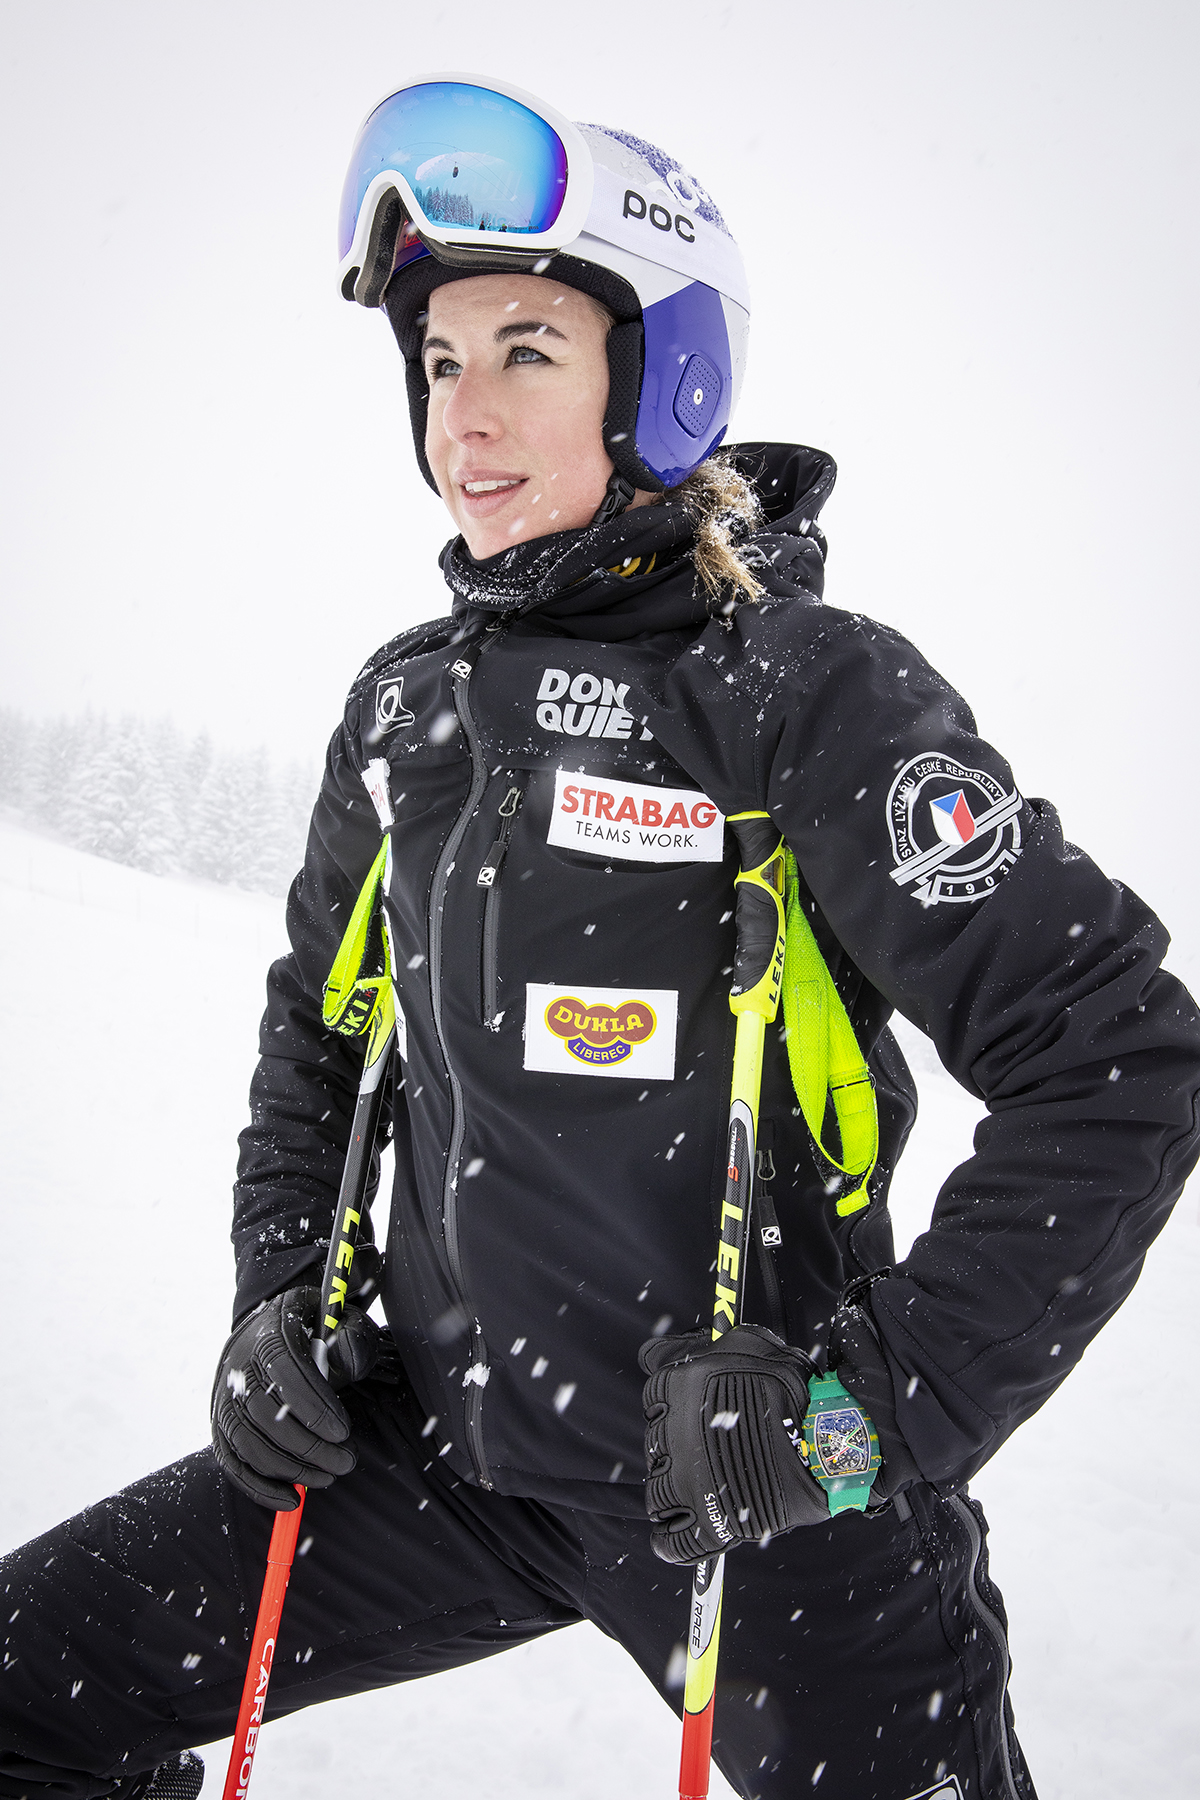 Woman in ski gear and helmet on ski slopes